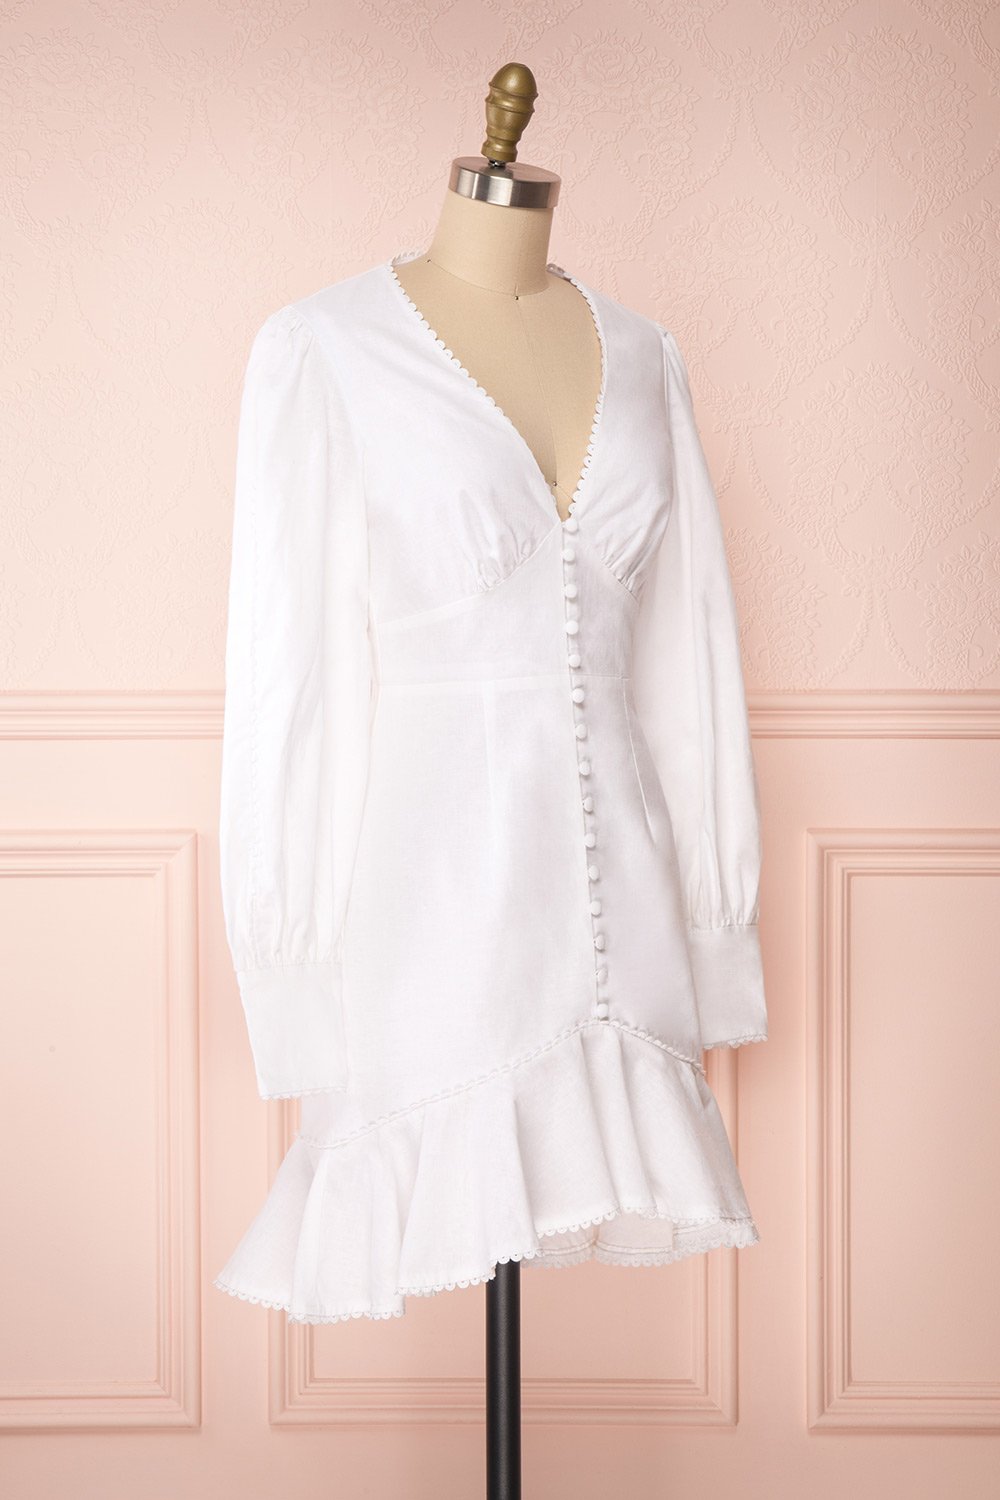 Anoukis White Long Sleeves Bridal Dress side view | Boudoir 1861